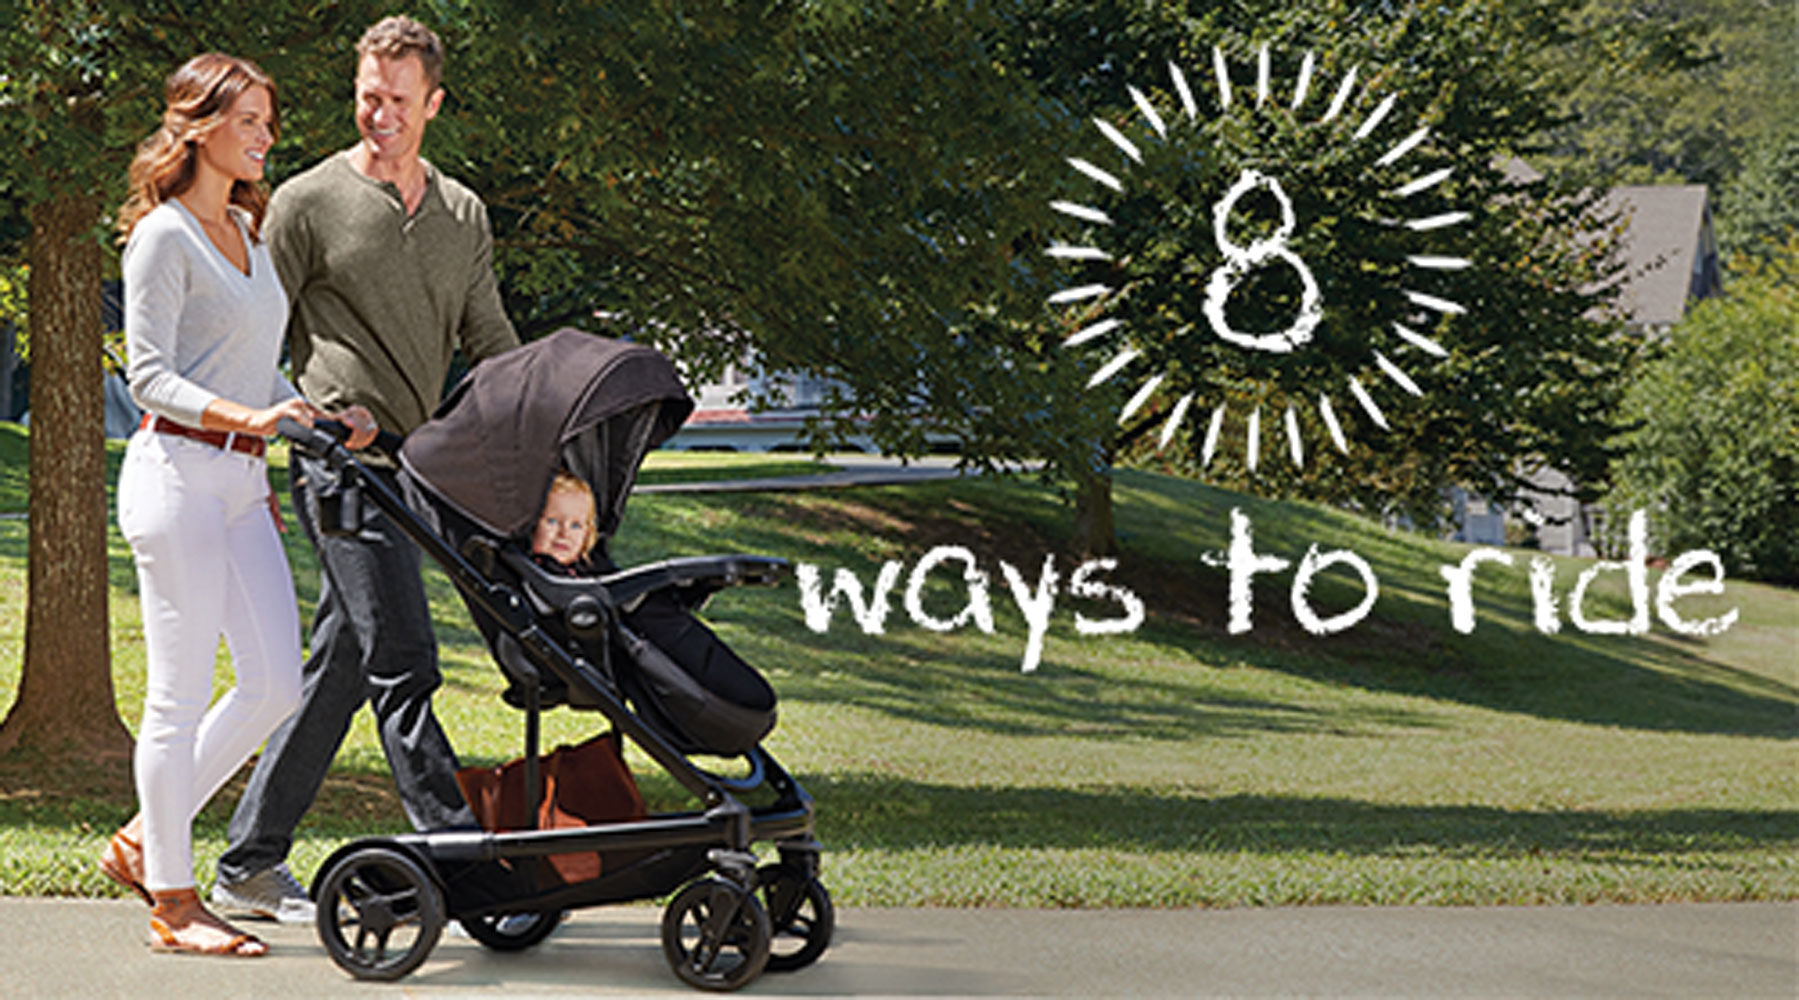 graco double stroller buy buy baby